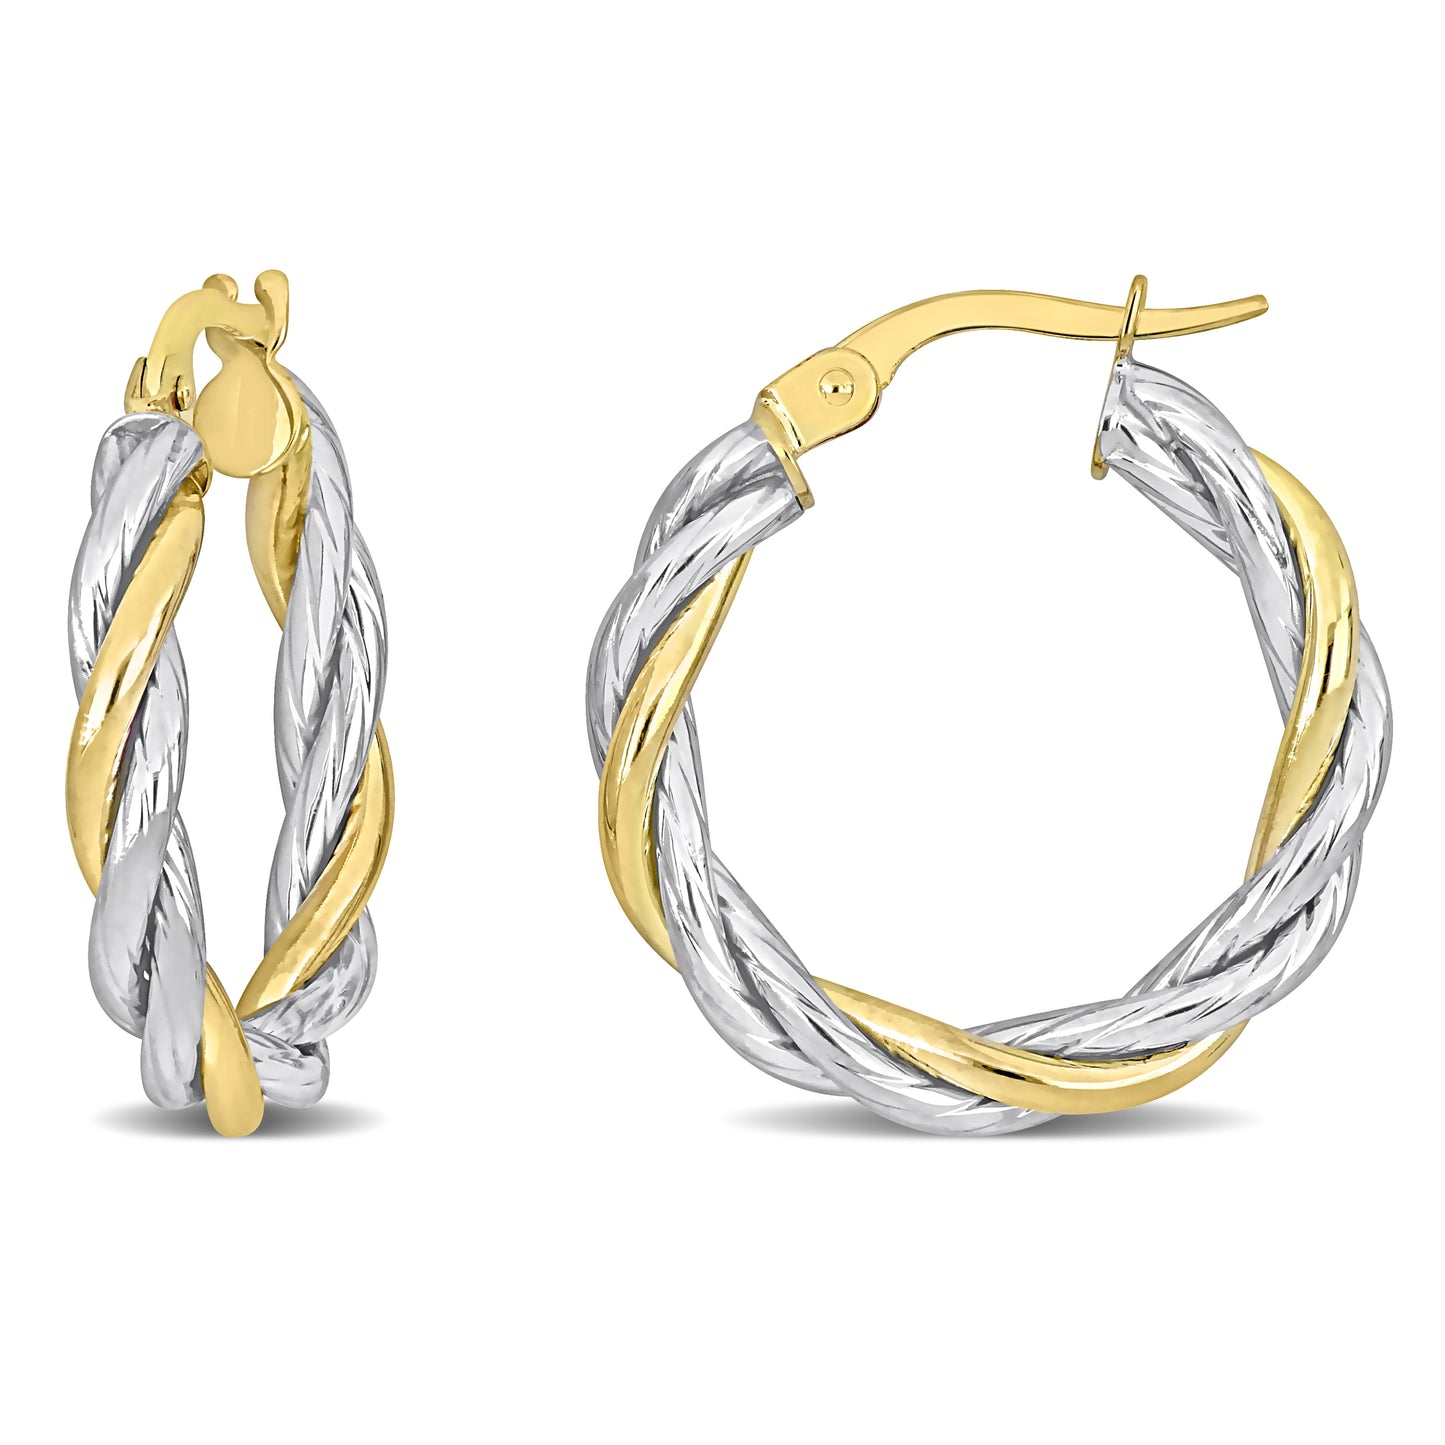 Twisted Hoop Earrings in 10k 2-Tone Gold